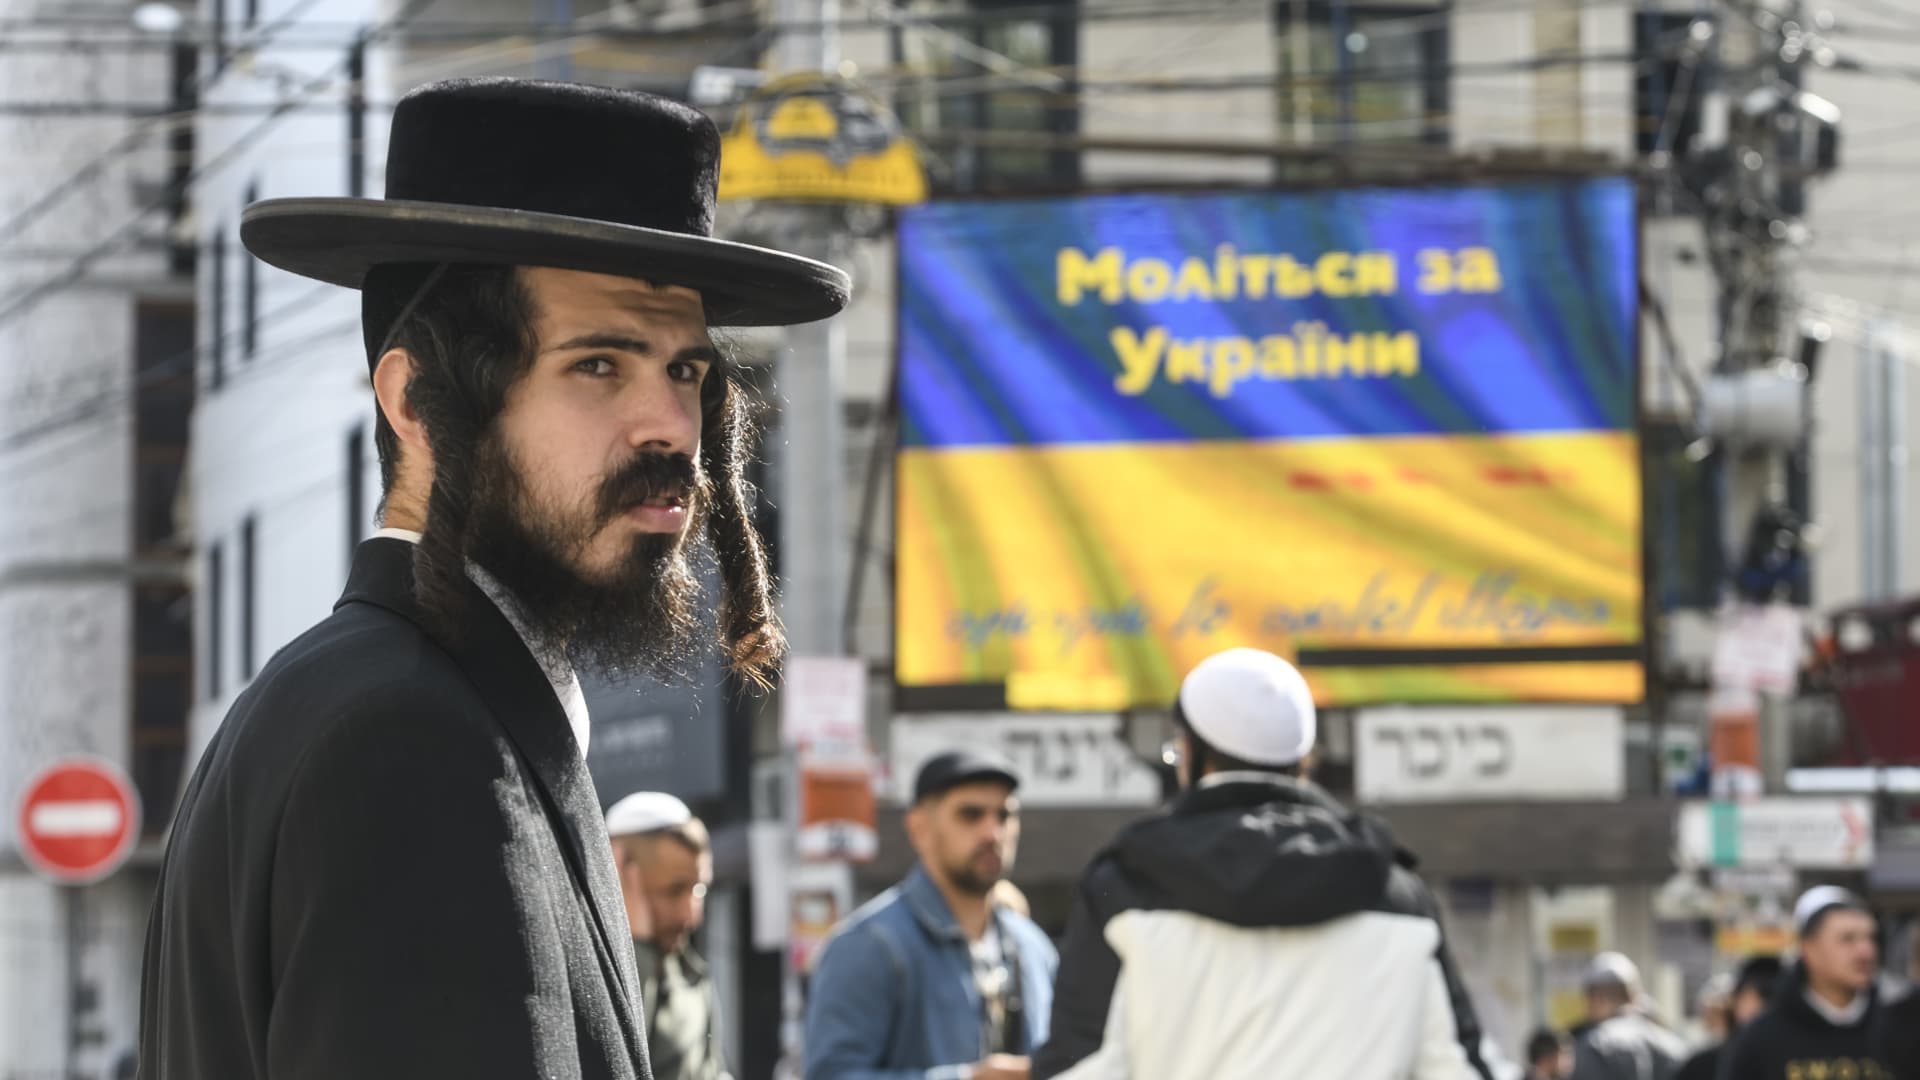 Orthodox Jewish pilgrims on the street near the tomb of Rabbi Nachman while celebrating Rosh Hashanah, the Jewish New Year,amid Russia continues the war in Ukraine. Uman, Ukraine, September 25, 2022.